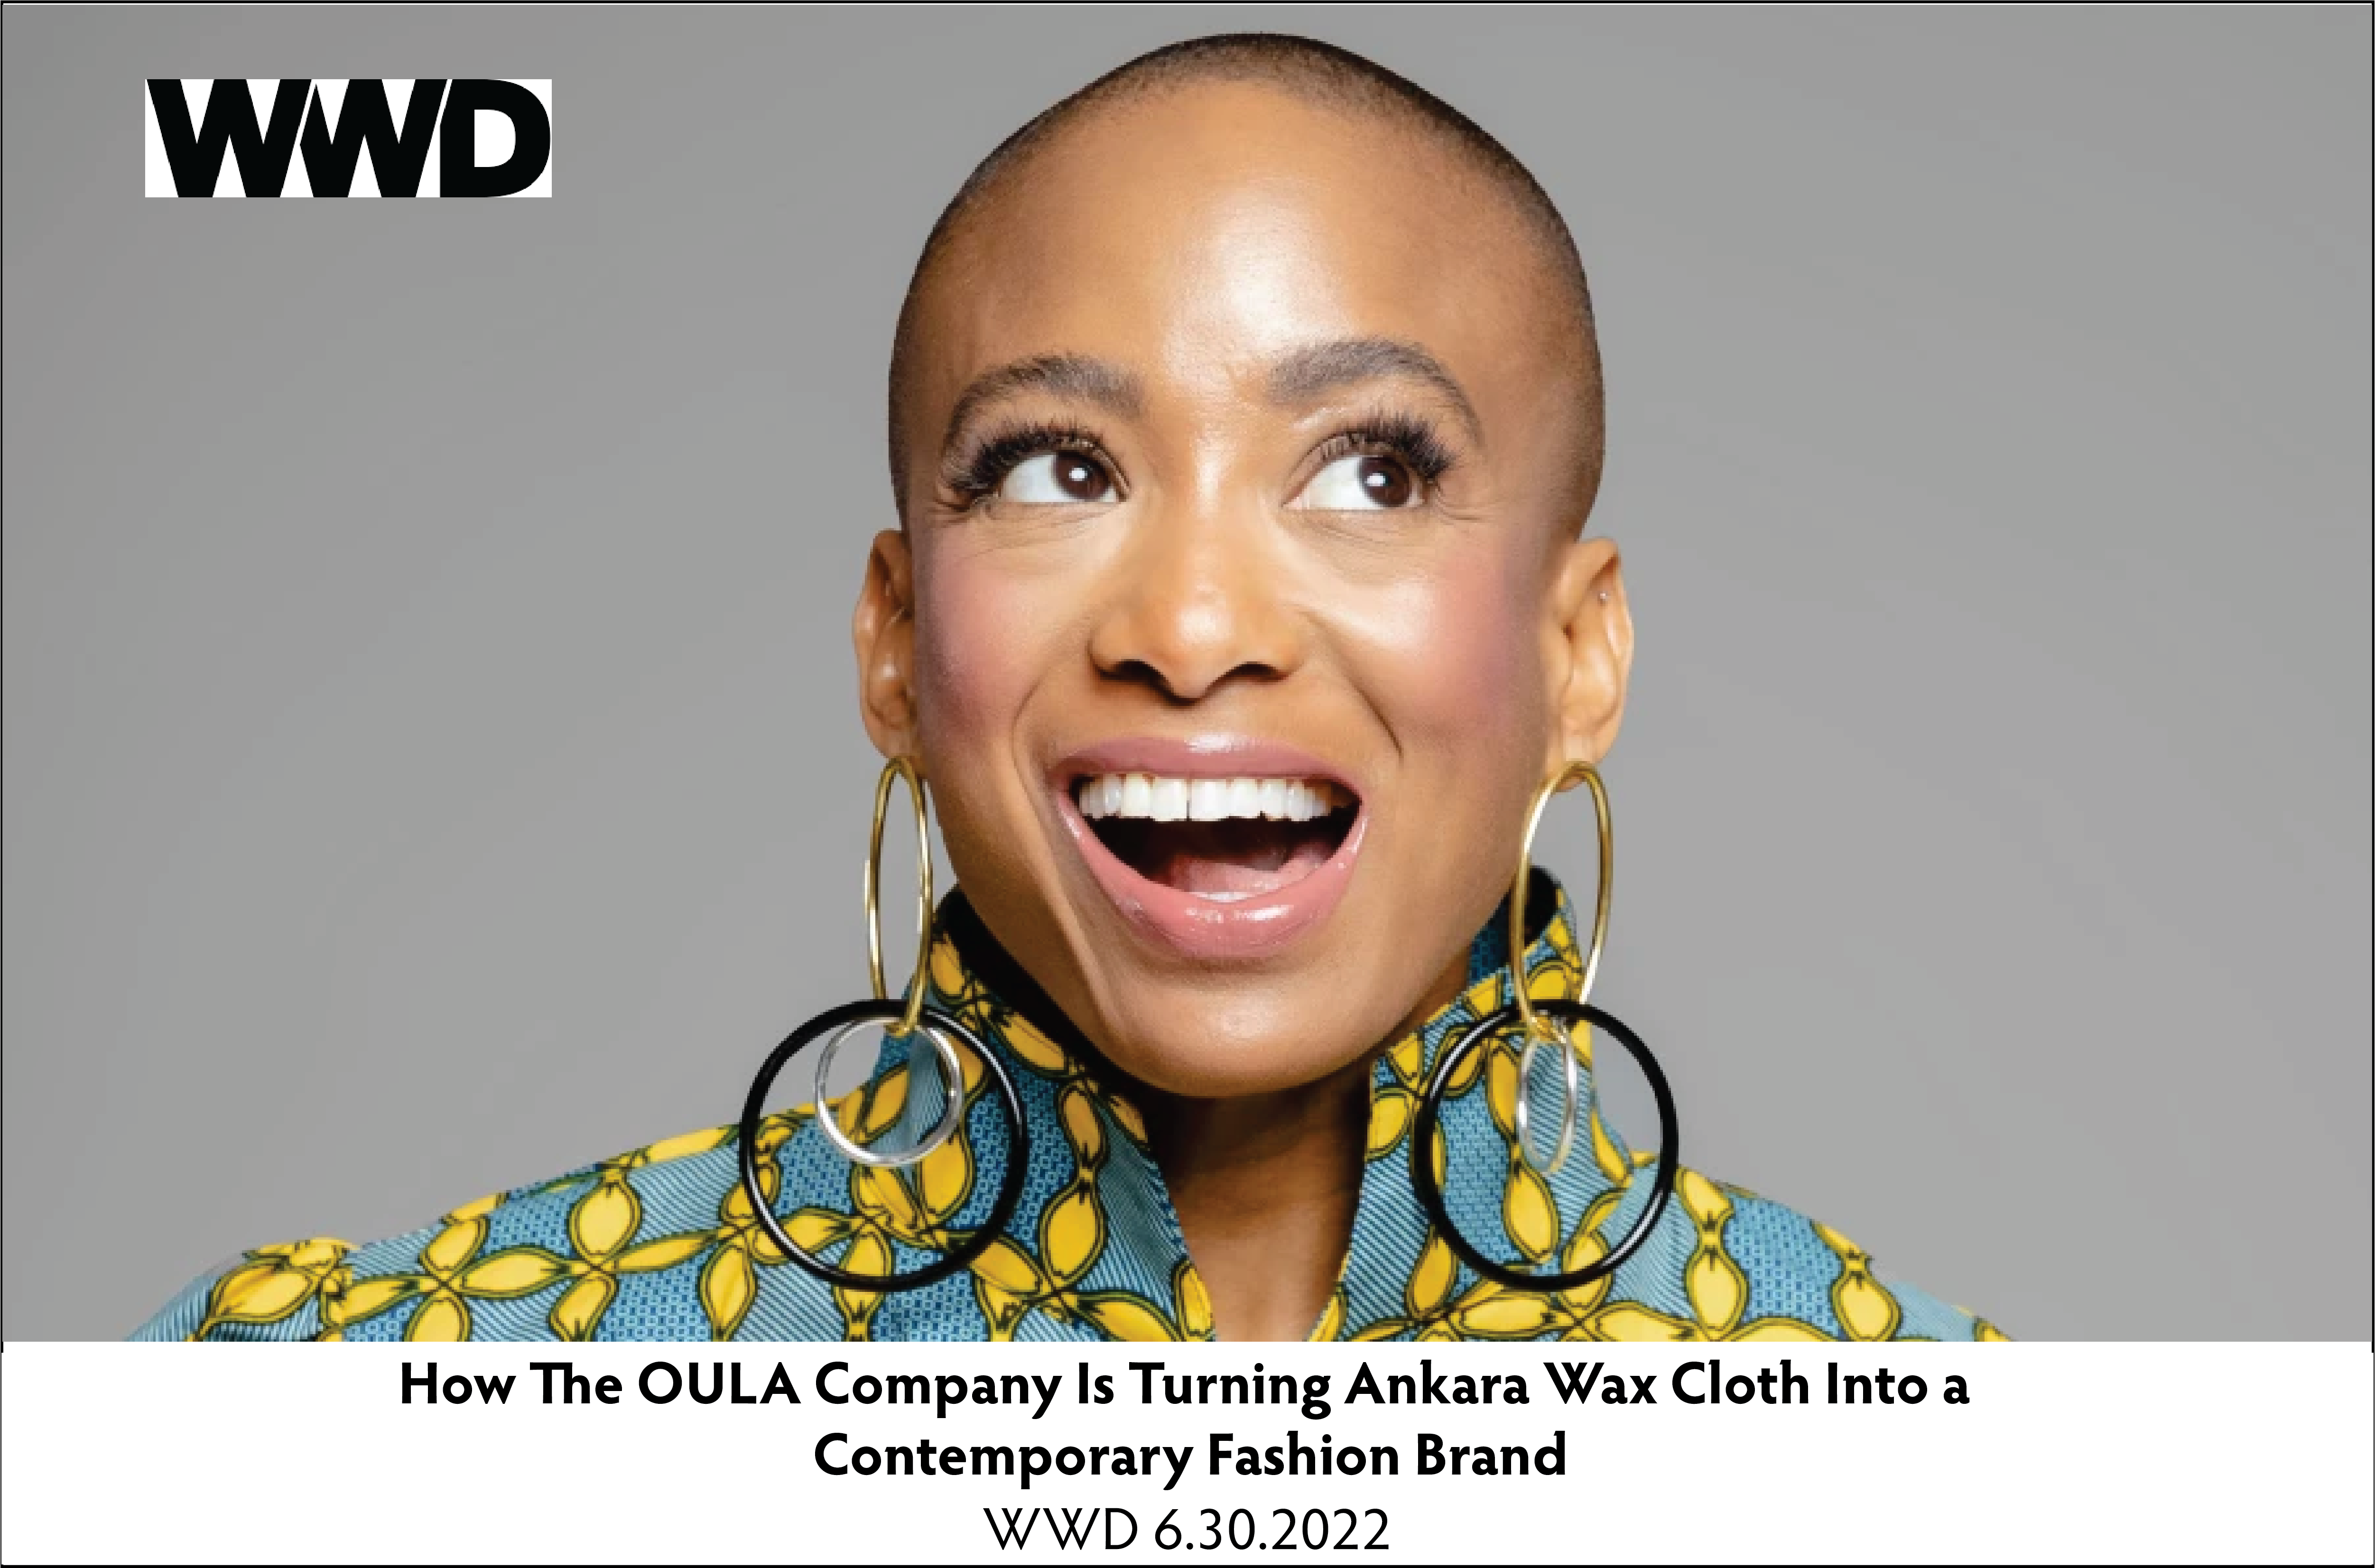 How The OULA Company Is Turning Ankara Wax Cloth Into a Contemporary Fashion Brand